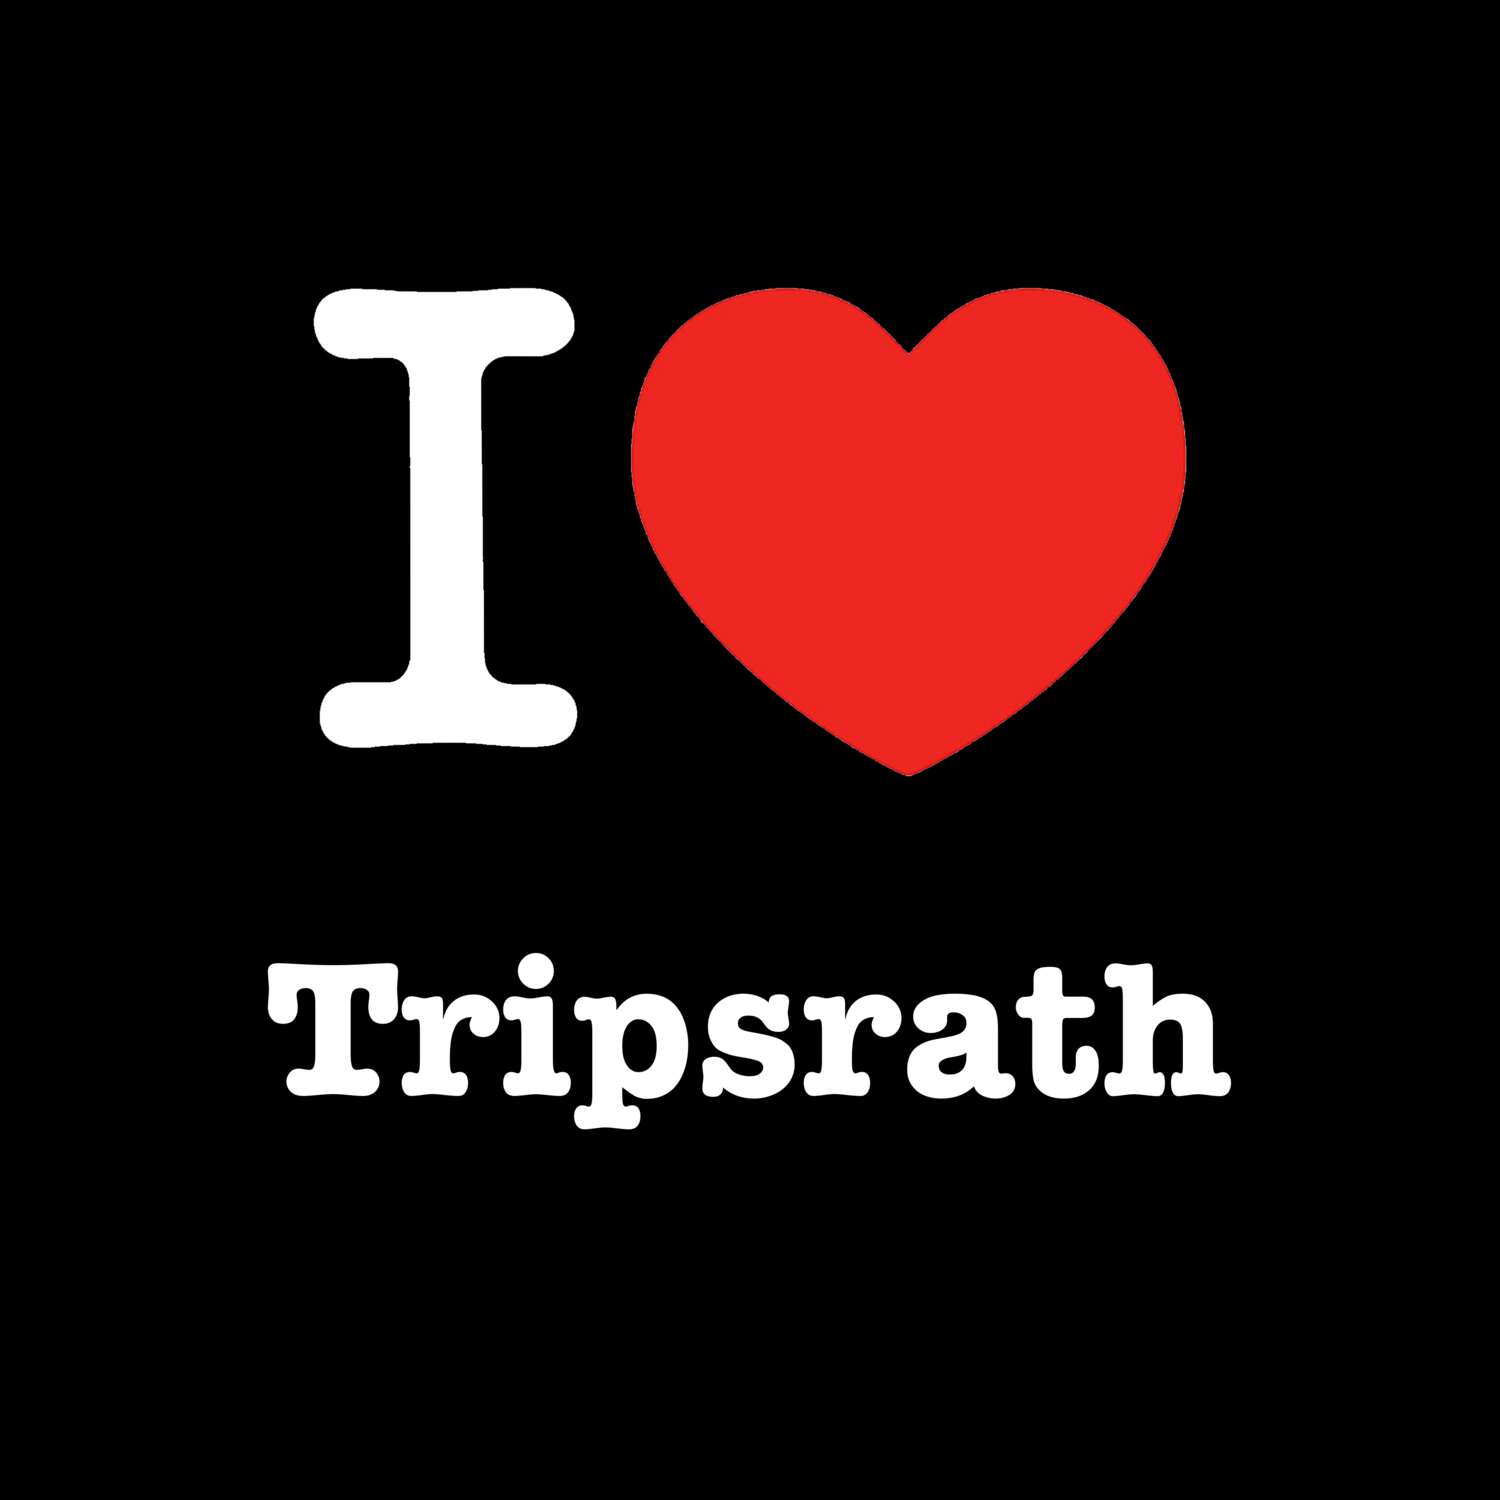 Tripsrath T-Shirt »I love«